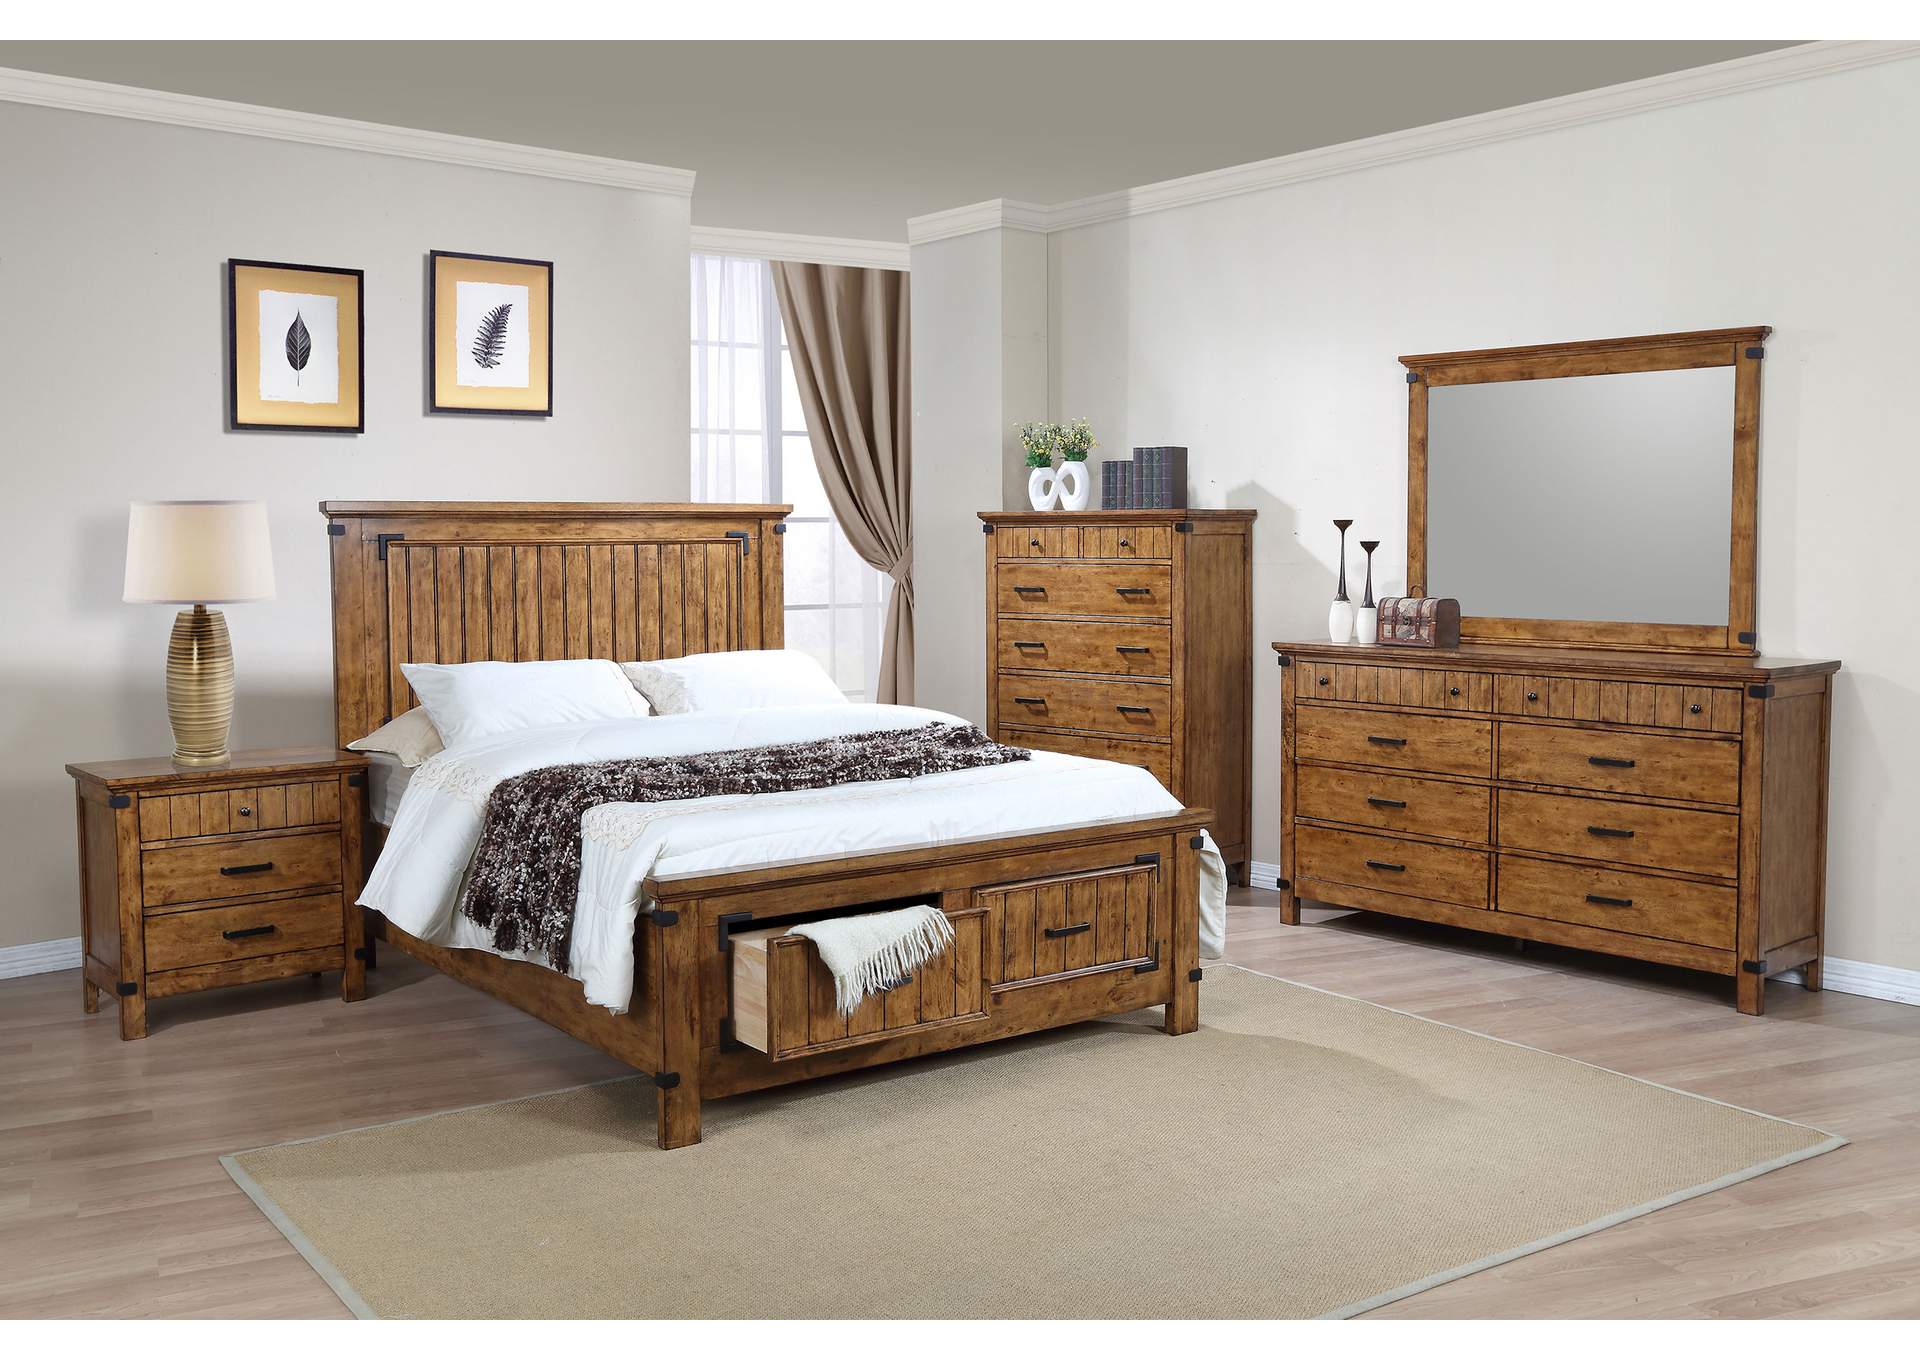 Brenner Eastern King Storage Bed Rustic Honey,Coaster Furniture